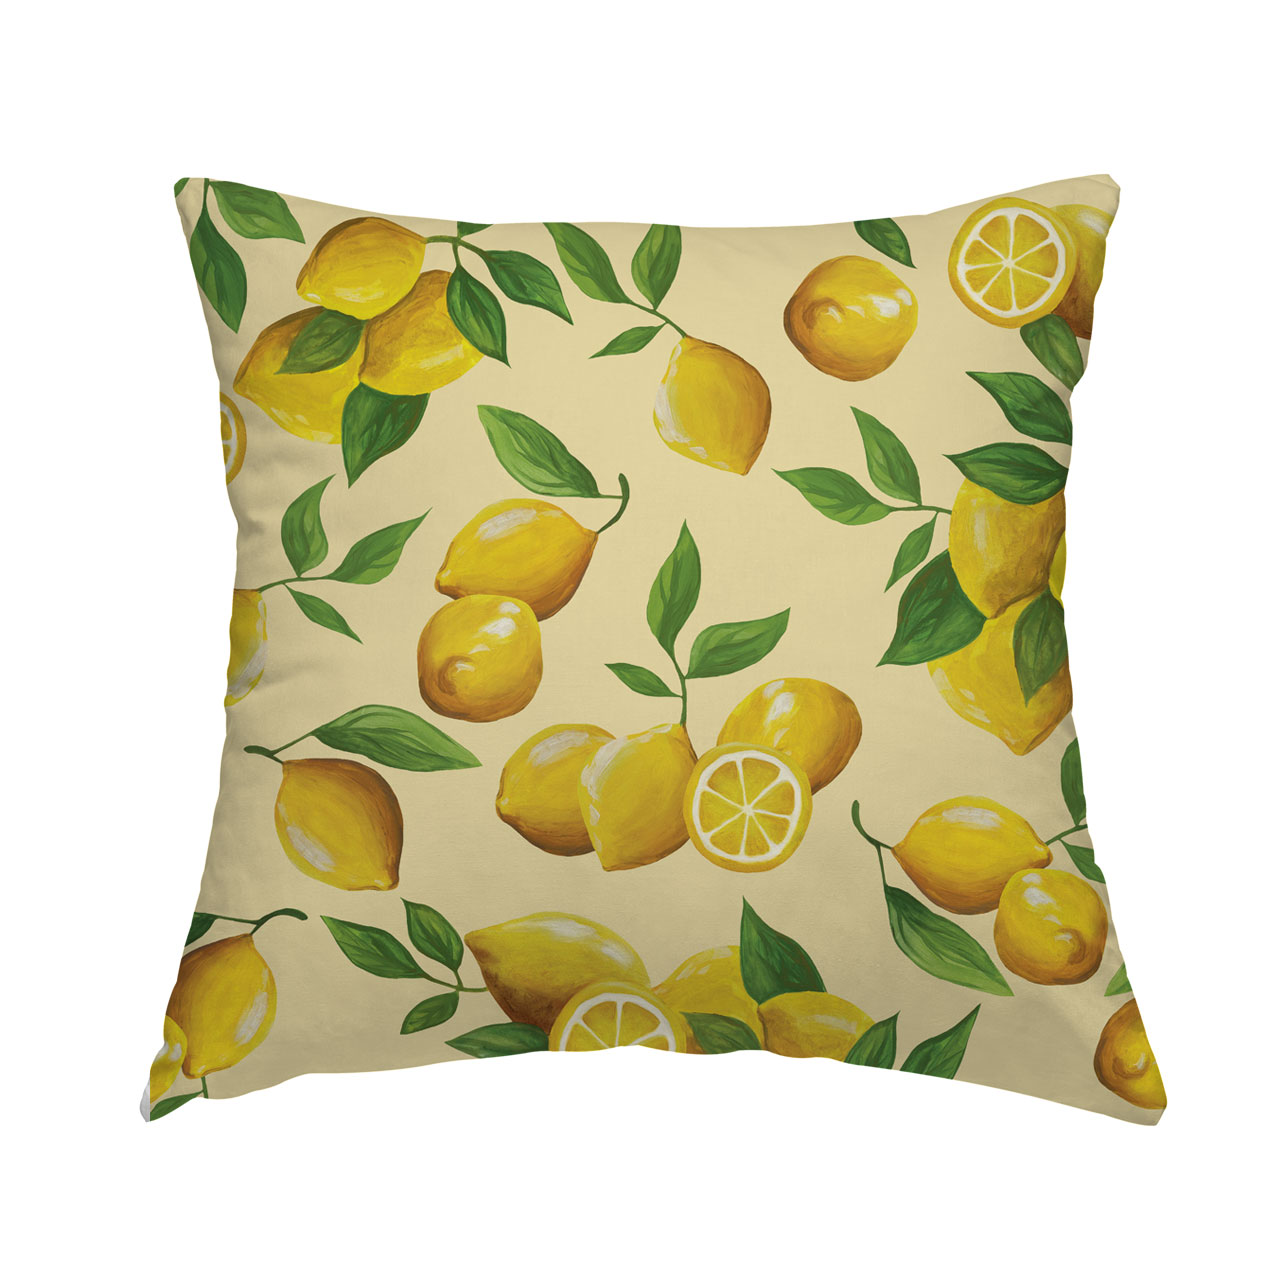 Lemons-Leaves-Vanilla-Yellow-Fruits-Citrus-Pillow